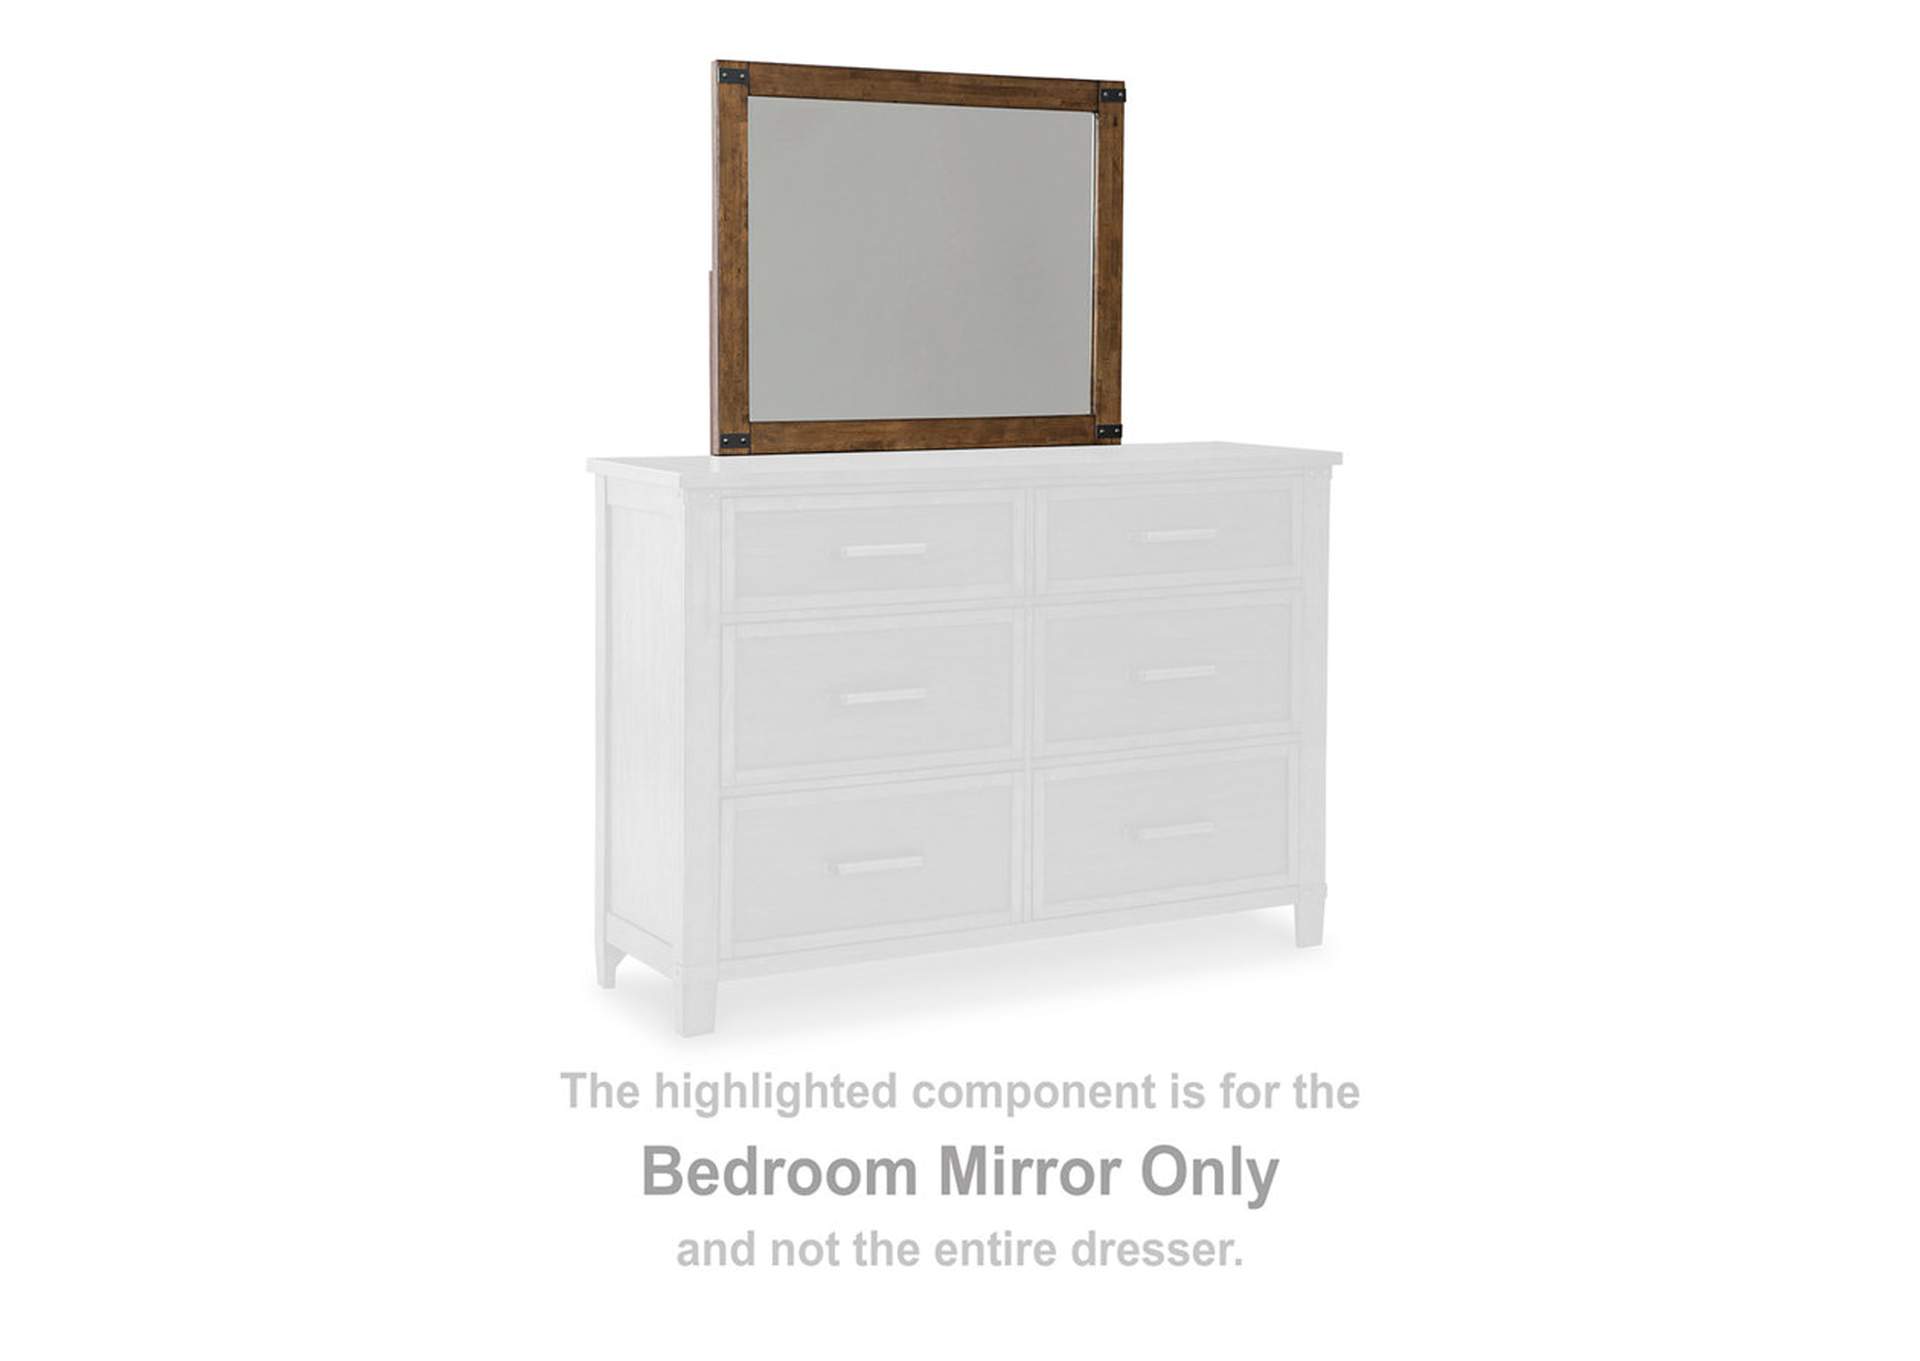 Wyattfield Bedroom Mirror,Benchcraft